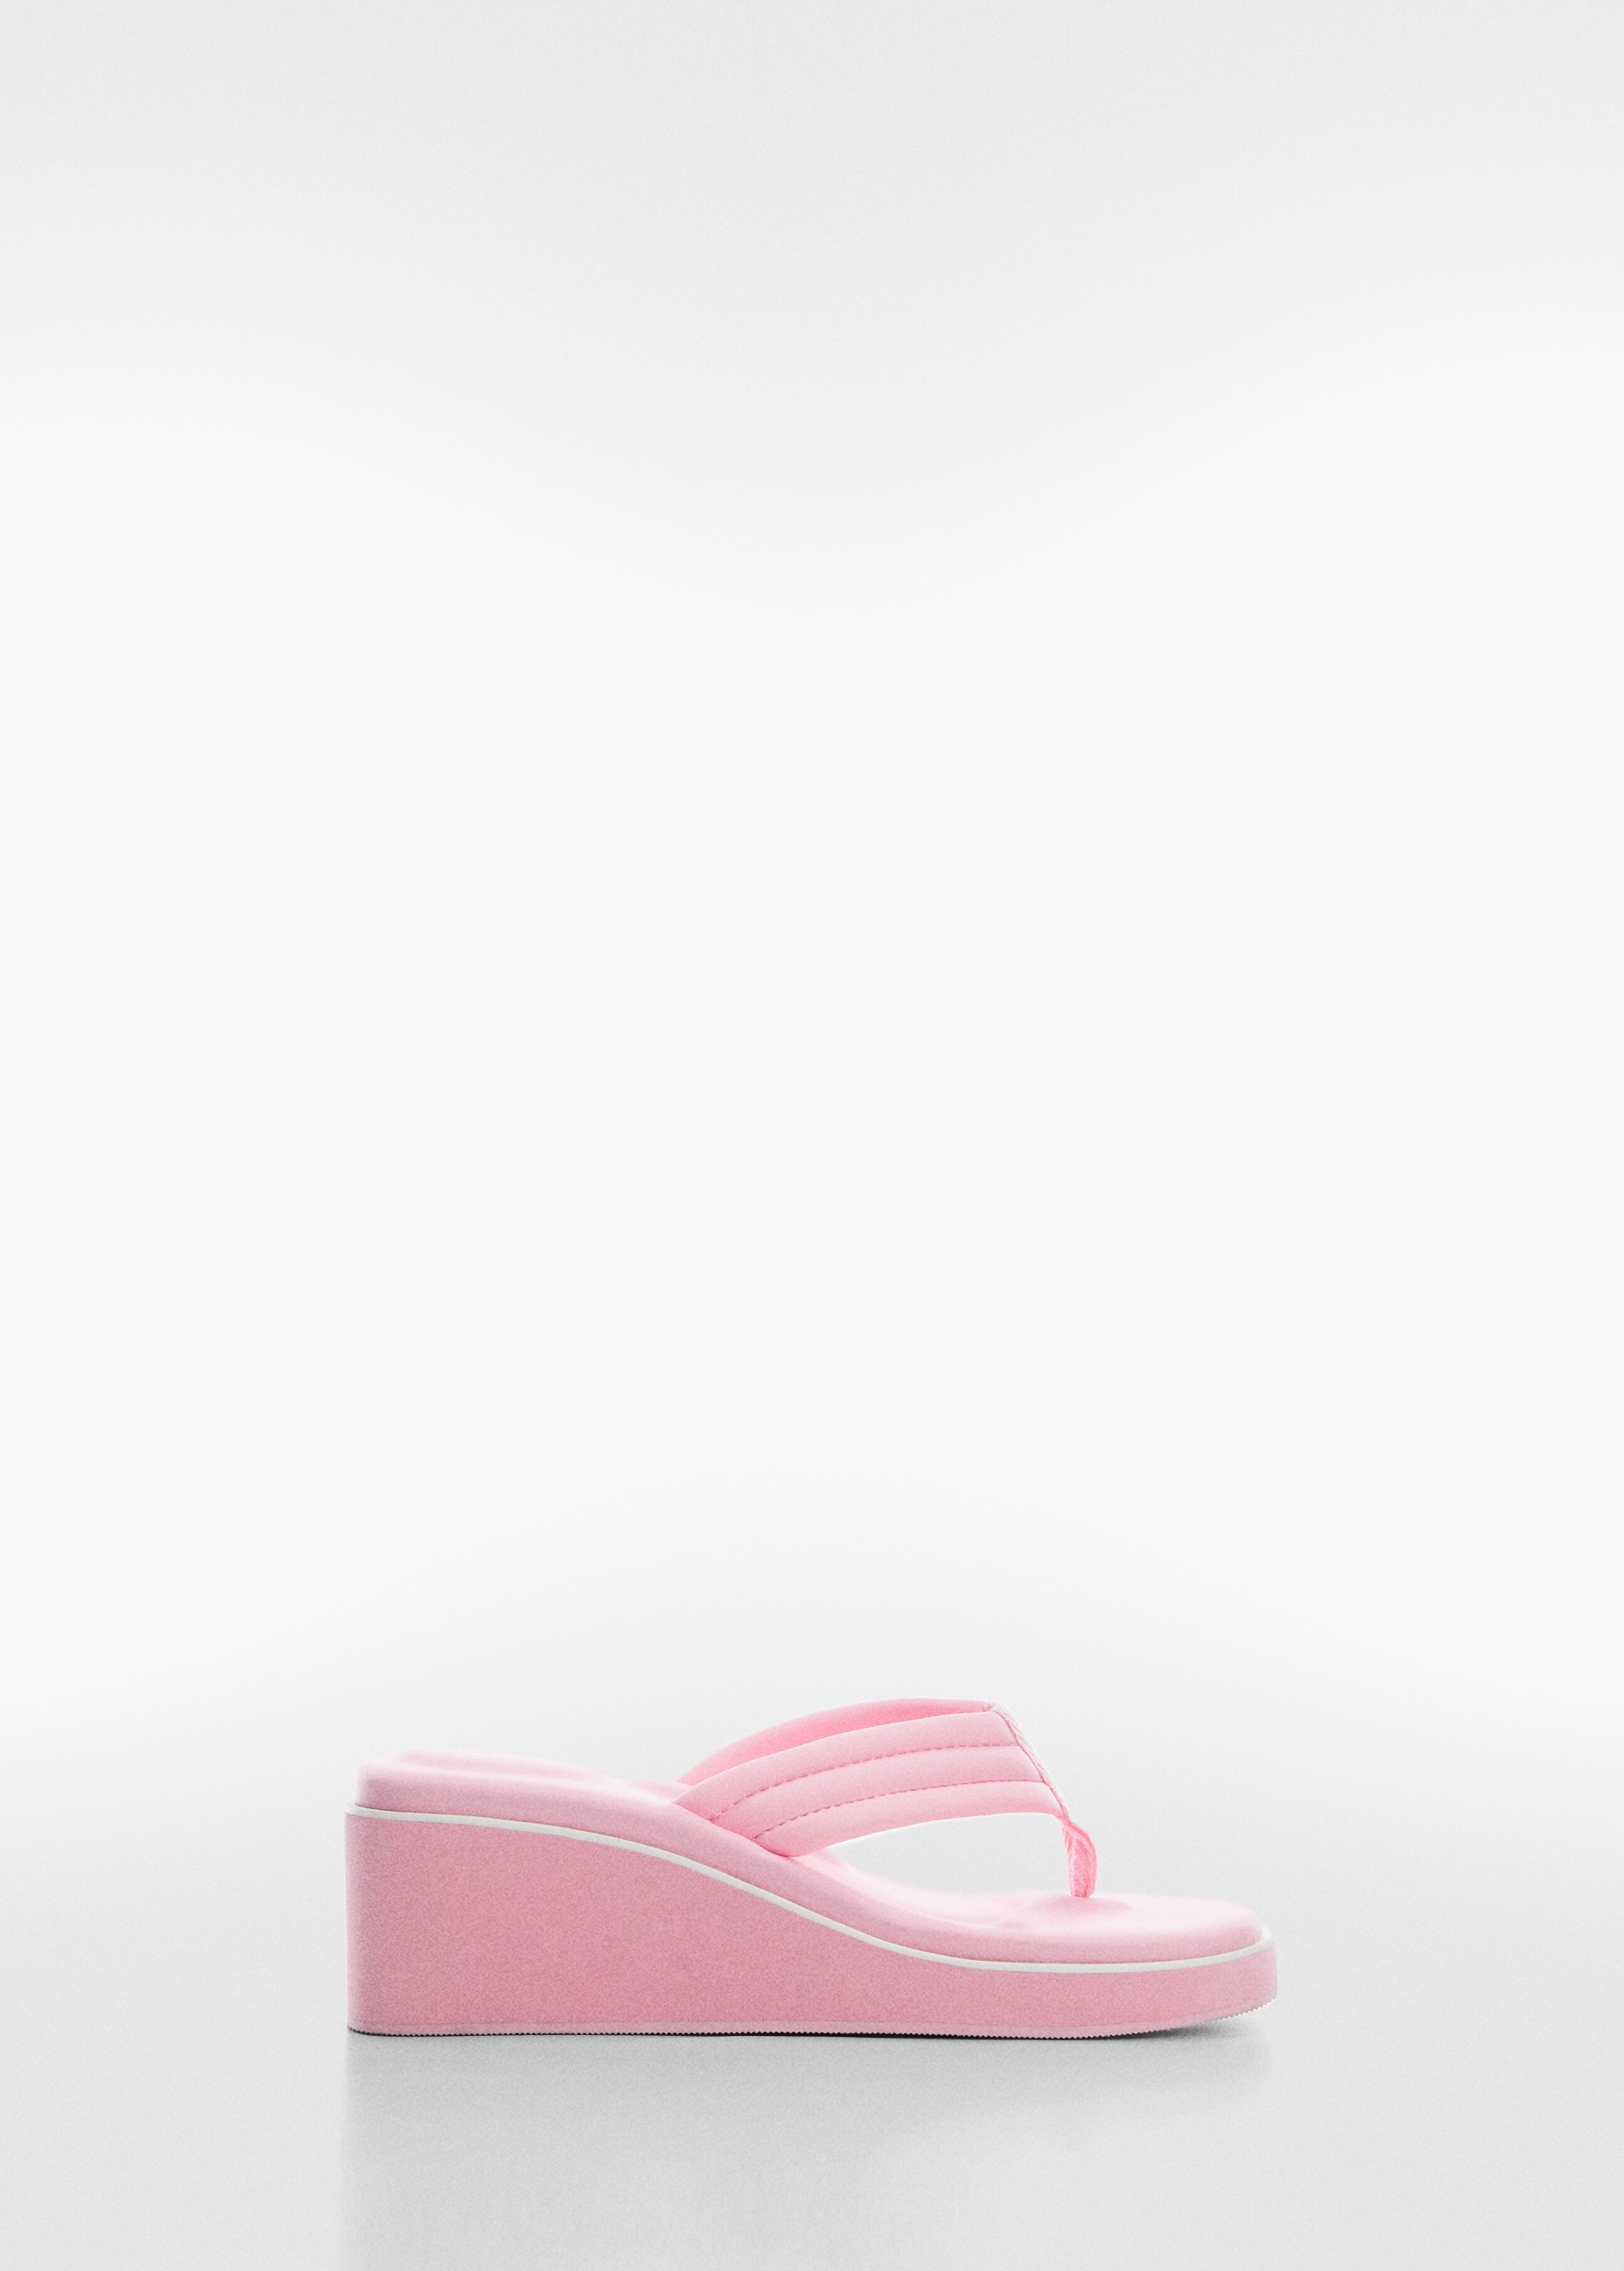 Prošivene sandale s platformom - Artikl bez modela